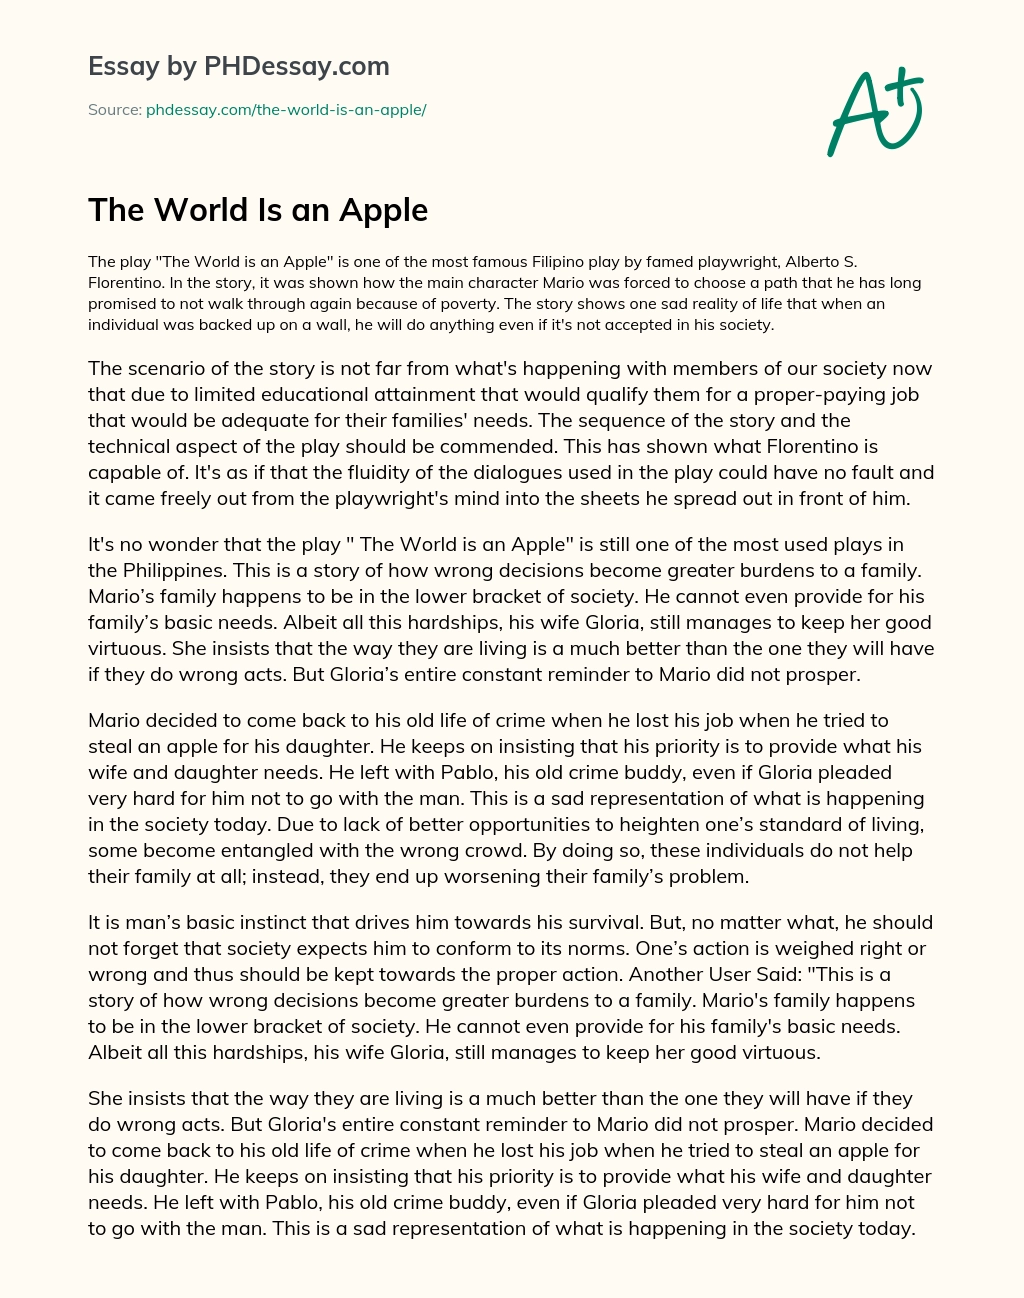 The World Is an Apple essay